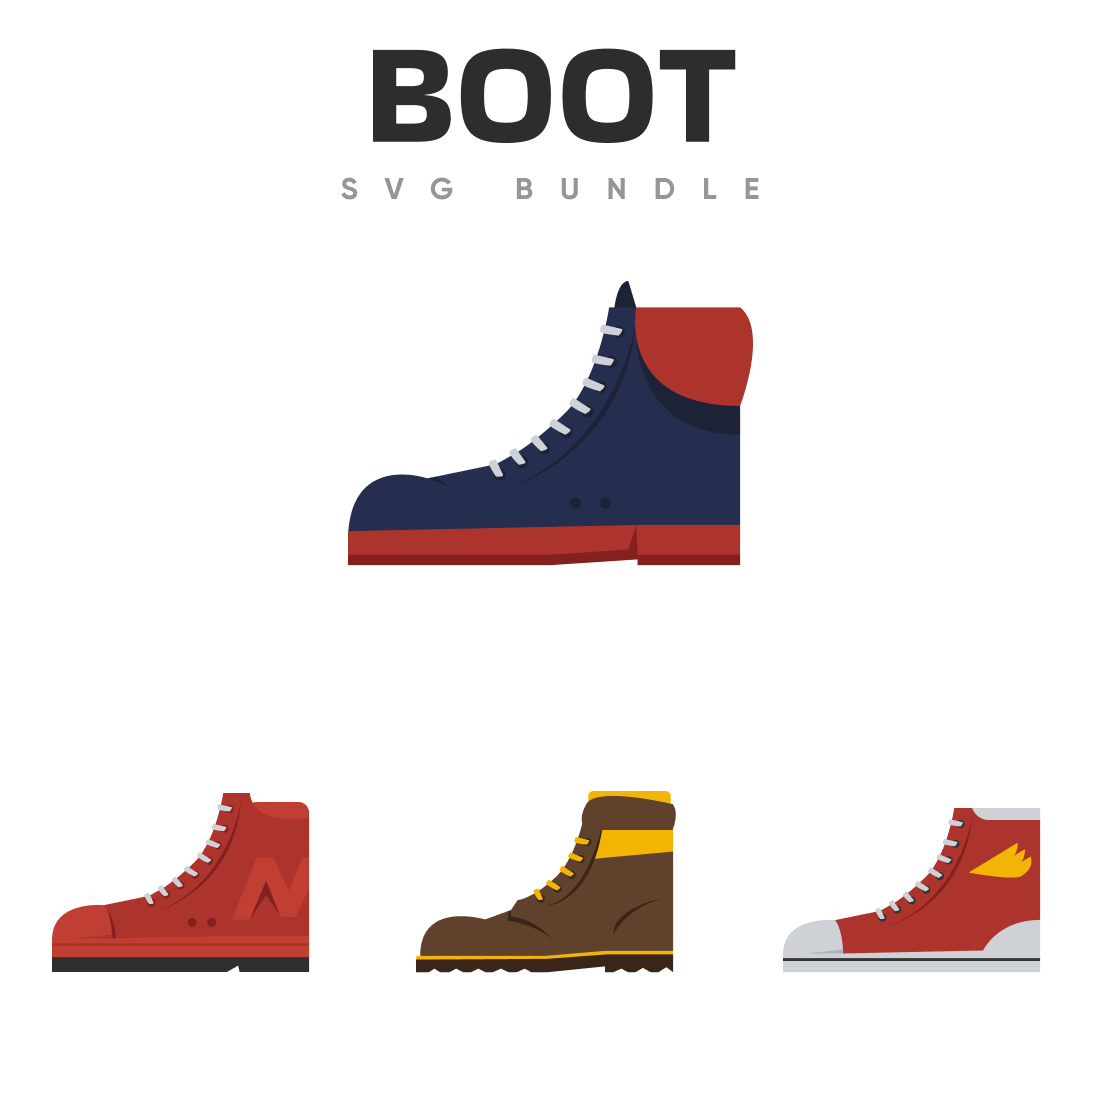 Boot svg bundle.